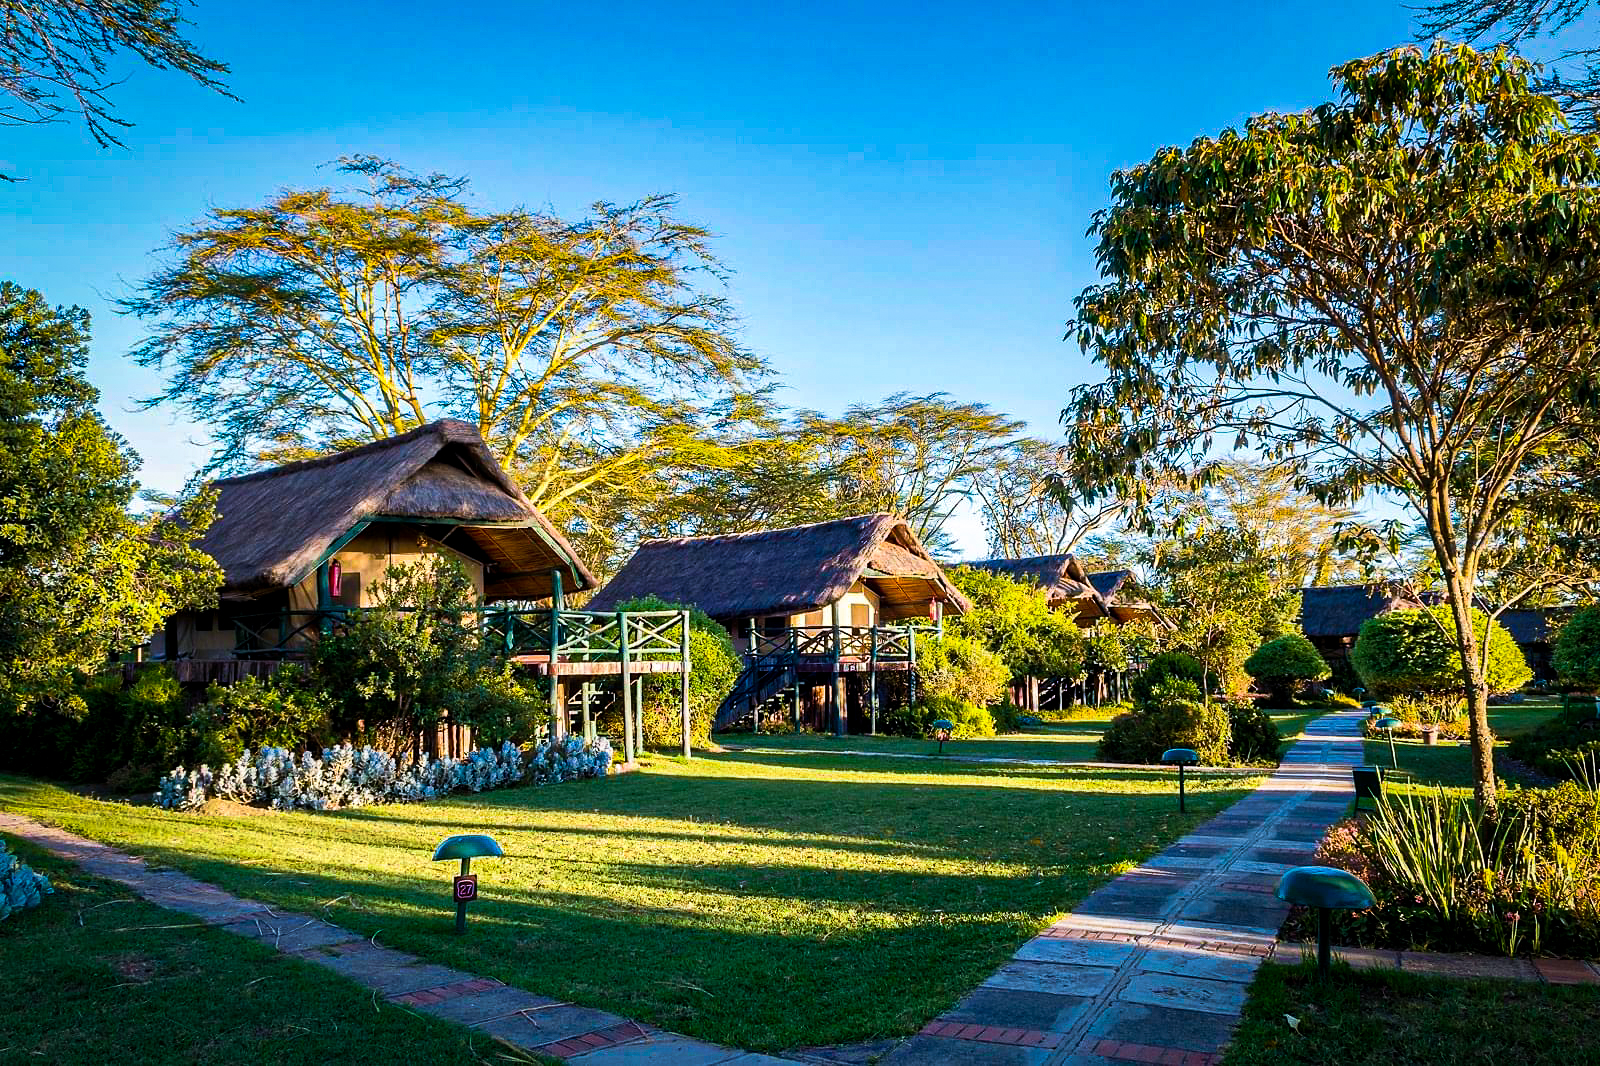 Kenya national park safari featuring Serena luxury Hotels